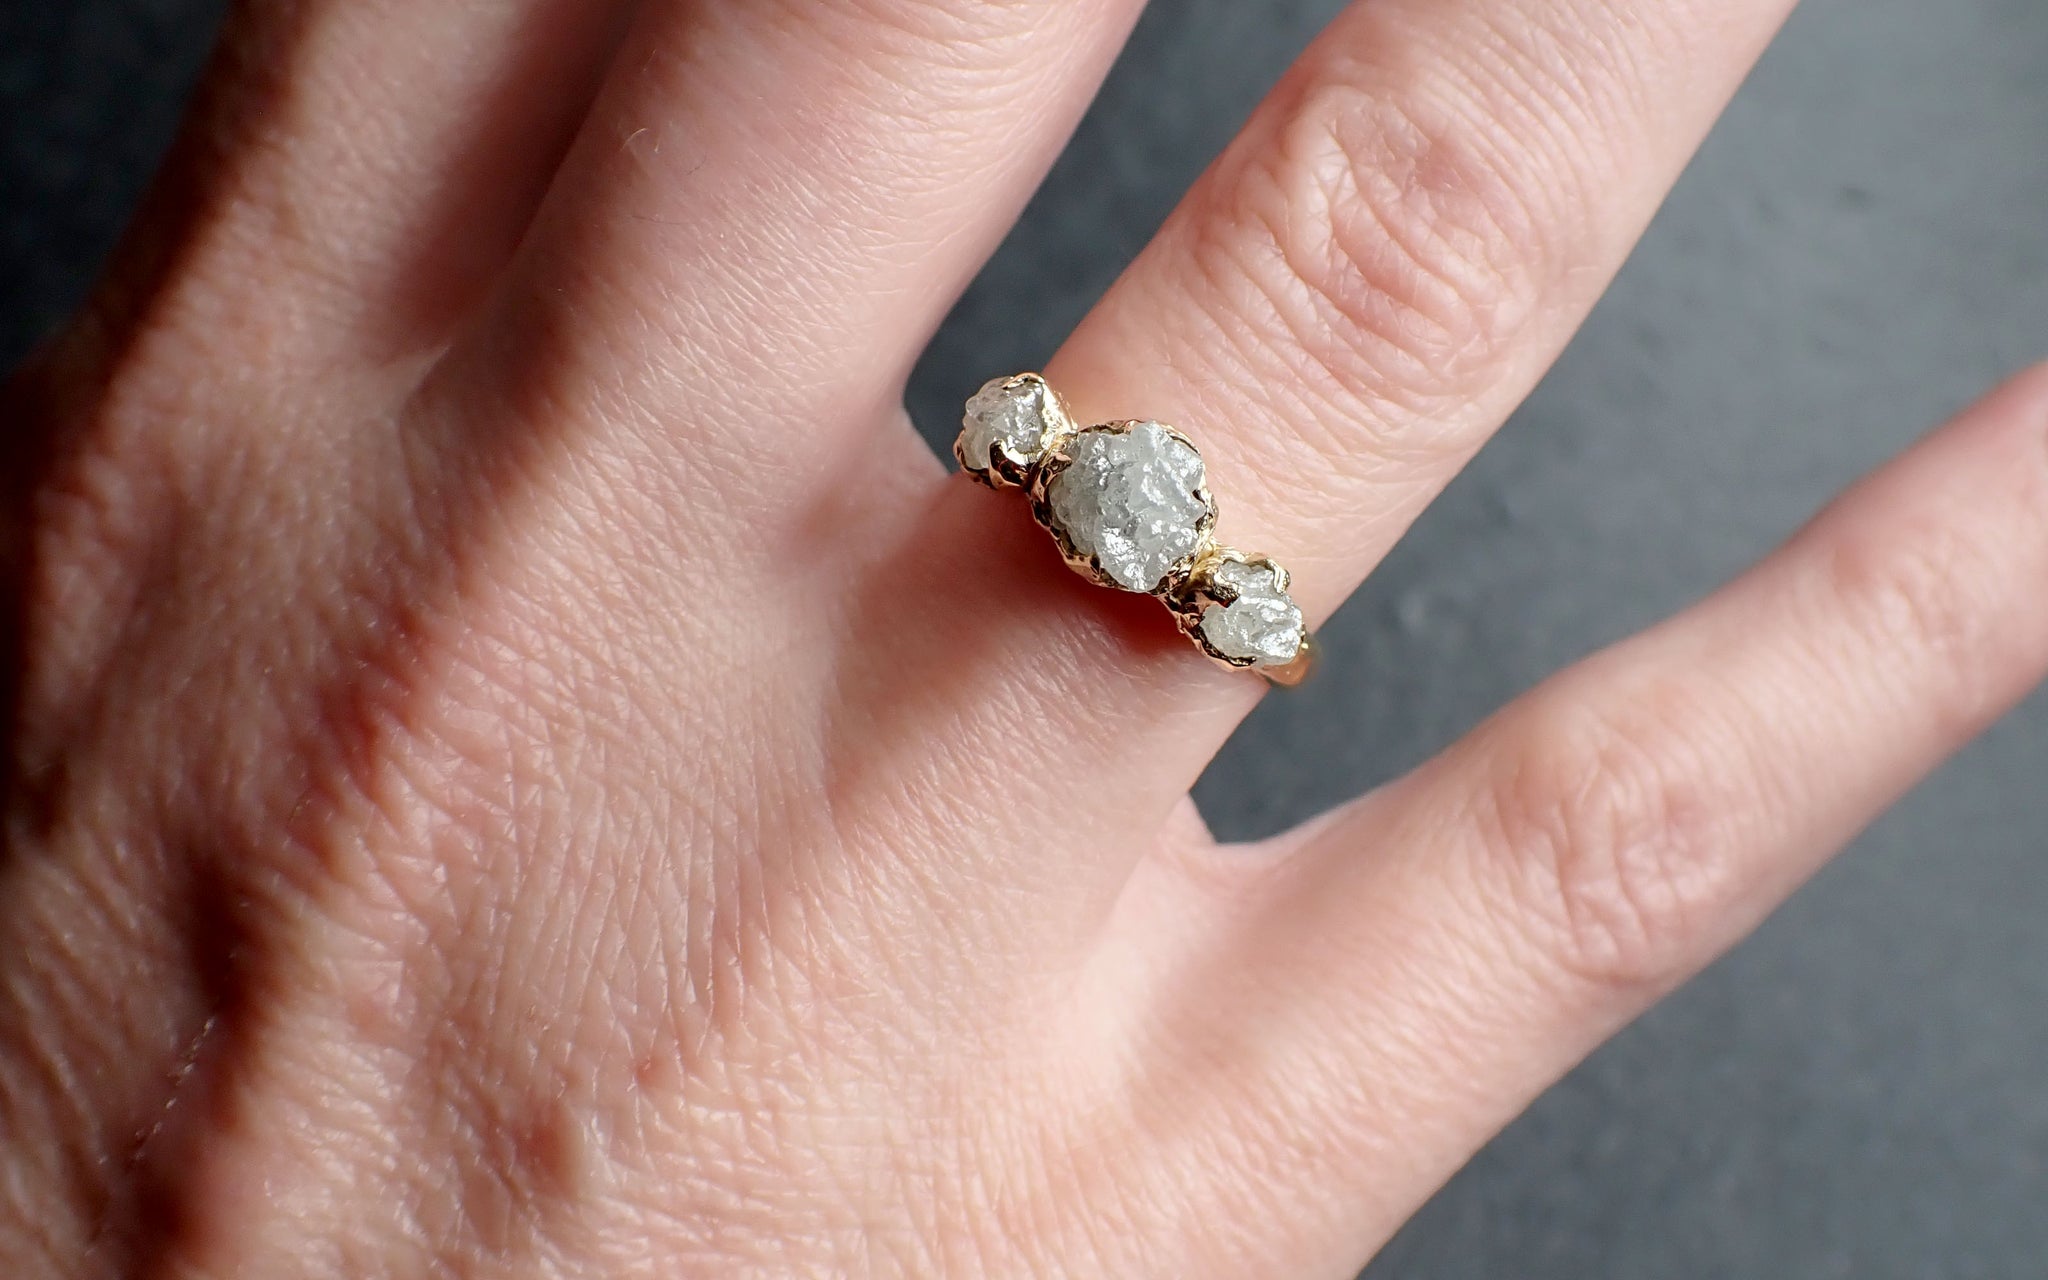 Raw Rough Diamond Engagement Stacking Multi stone Wedding anniversary 14k Gold Ring Rustic 2496